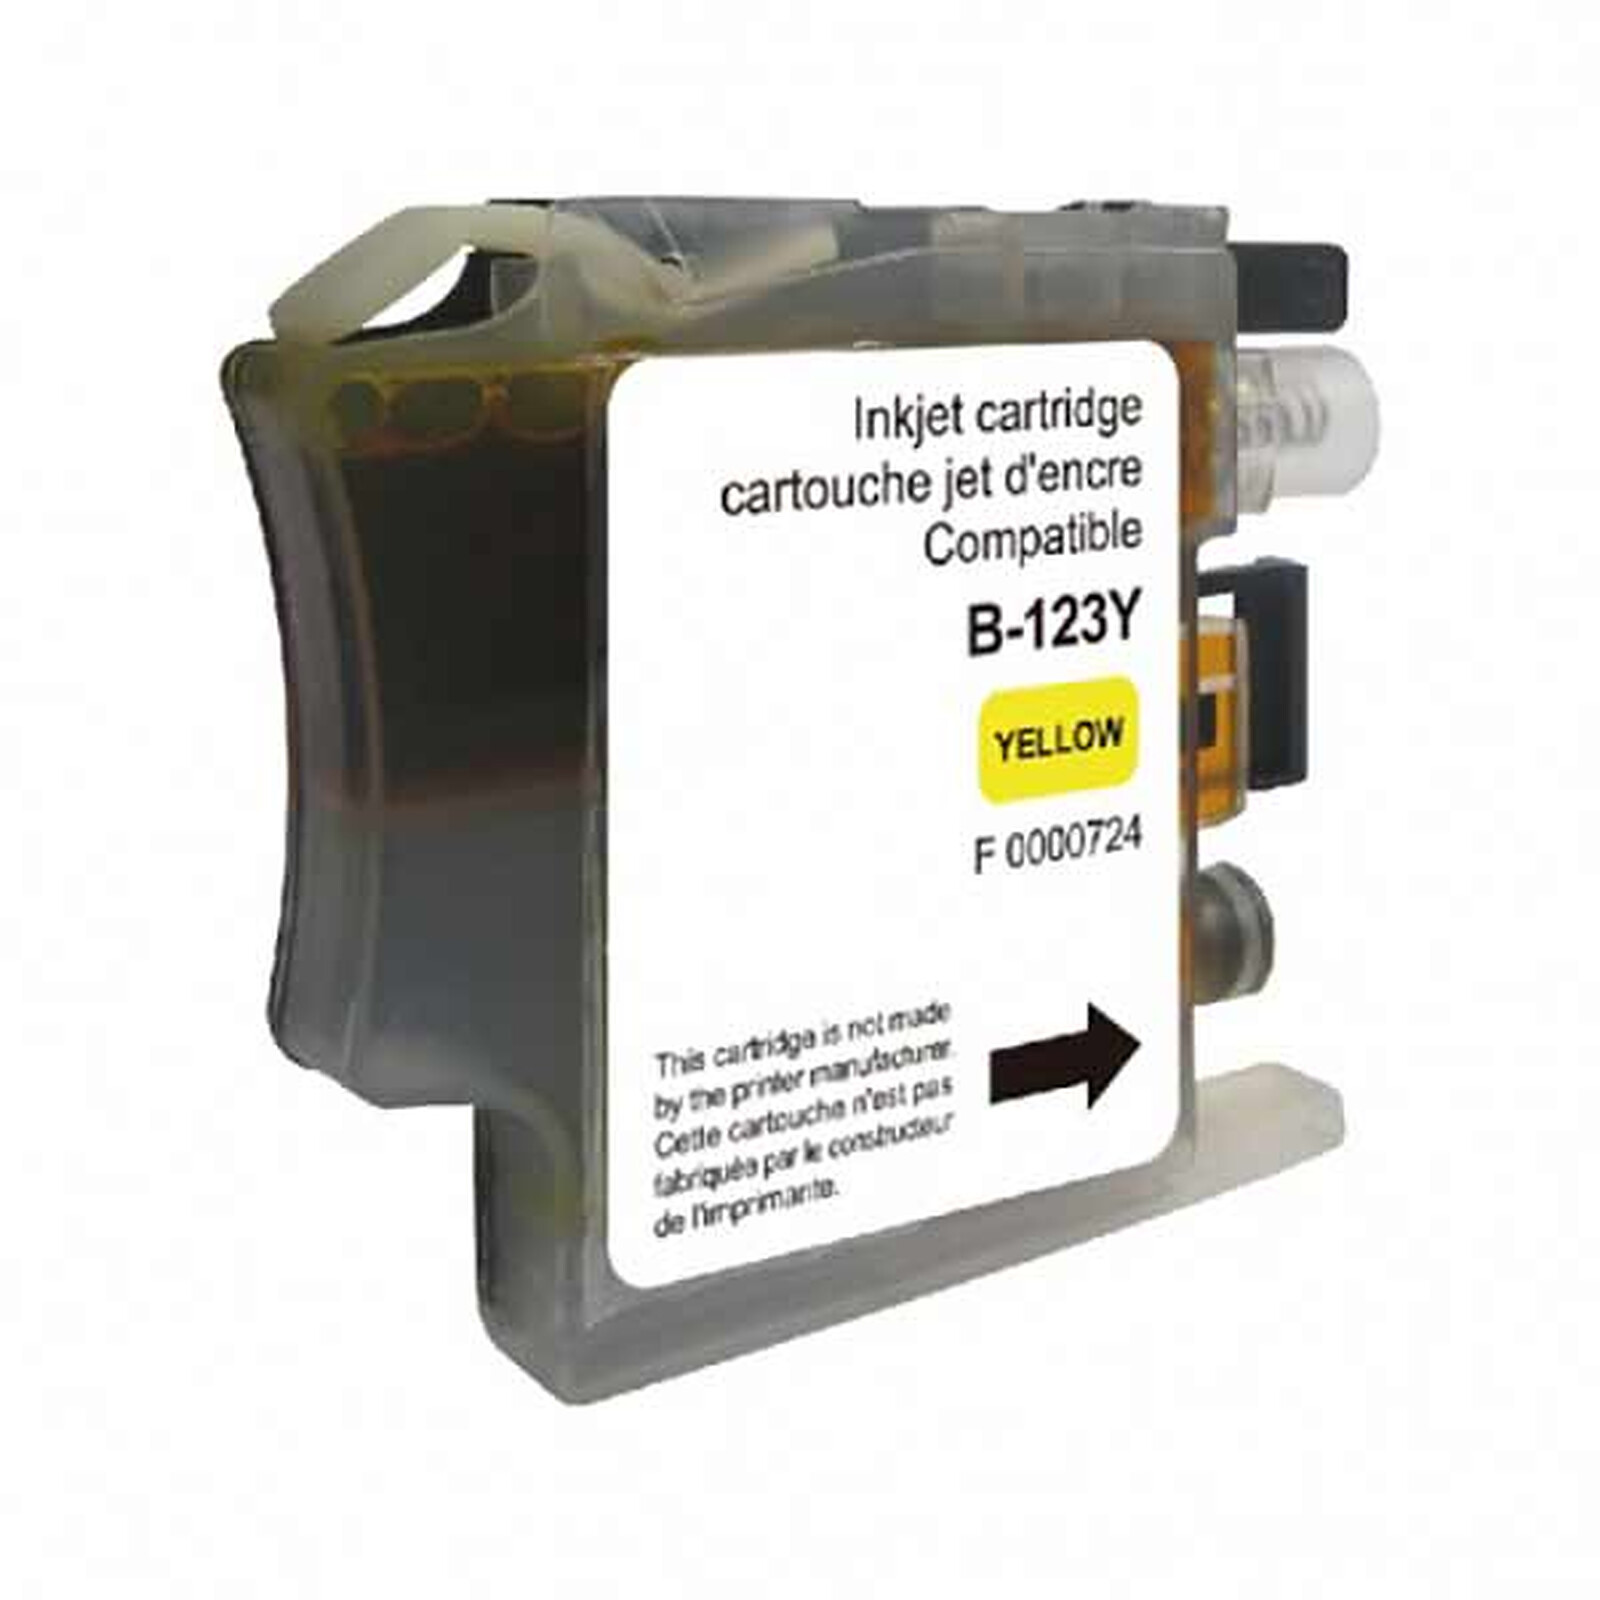 Cartouche compatible HP 302XL - cyan, magenta, jaune - Uprint